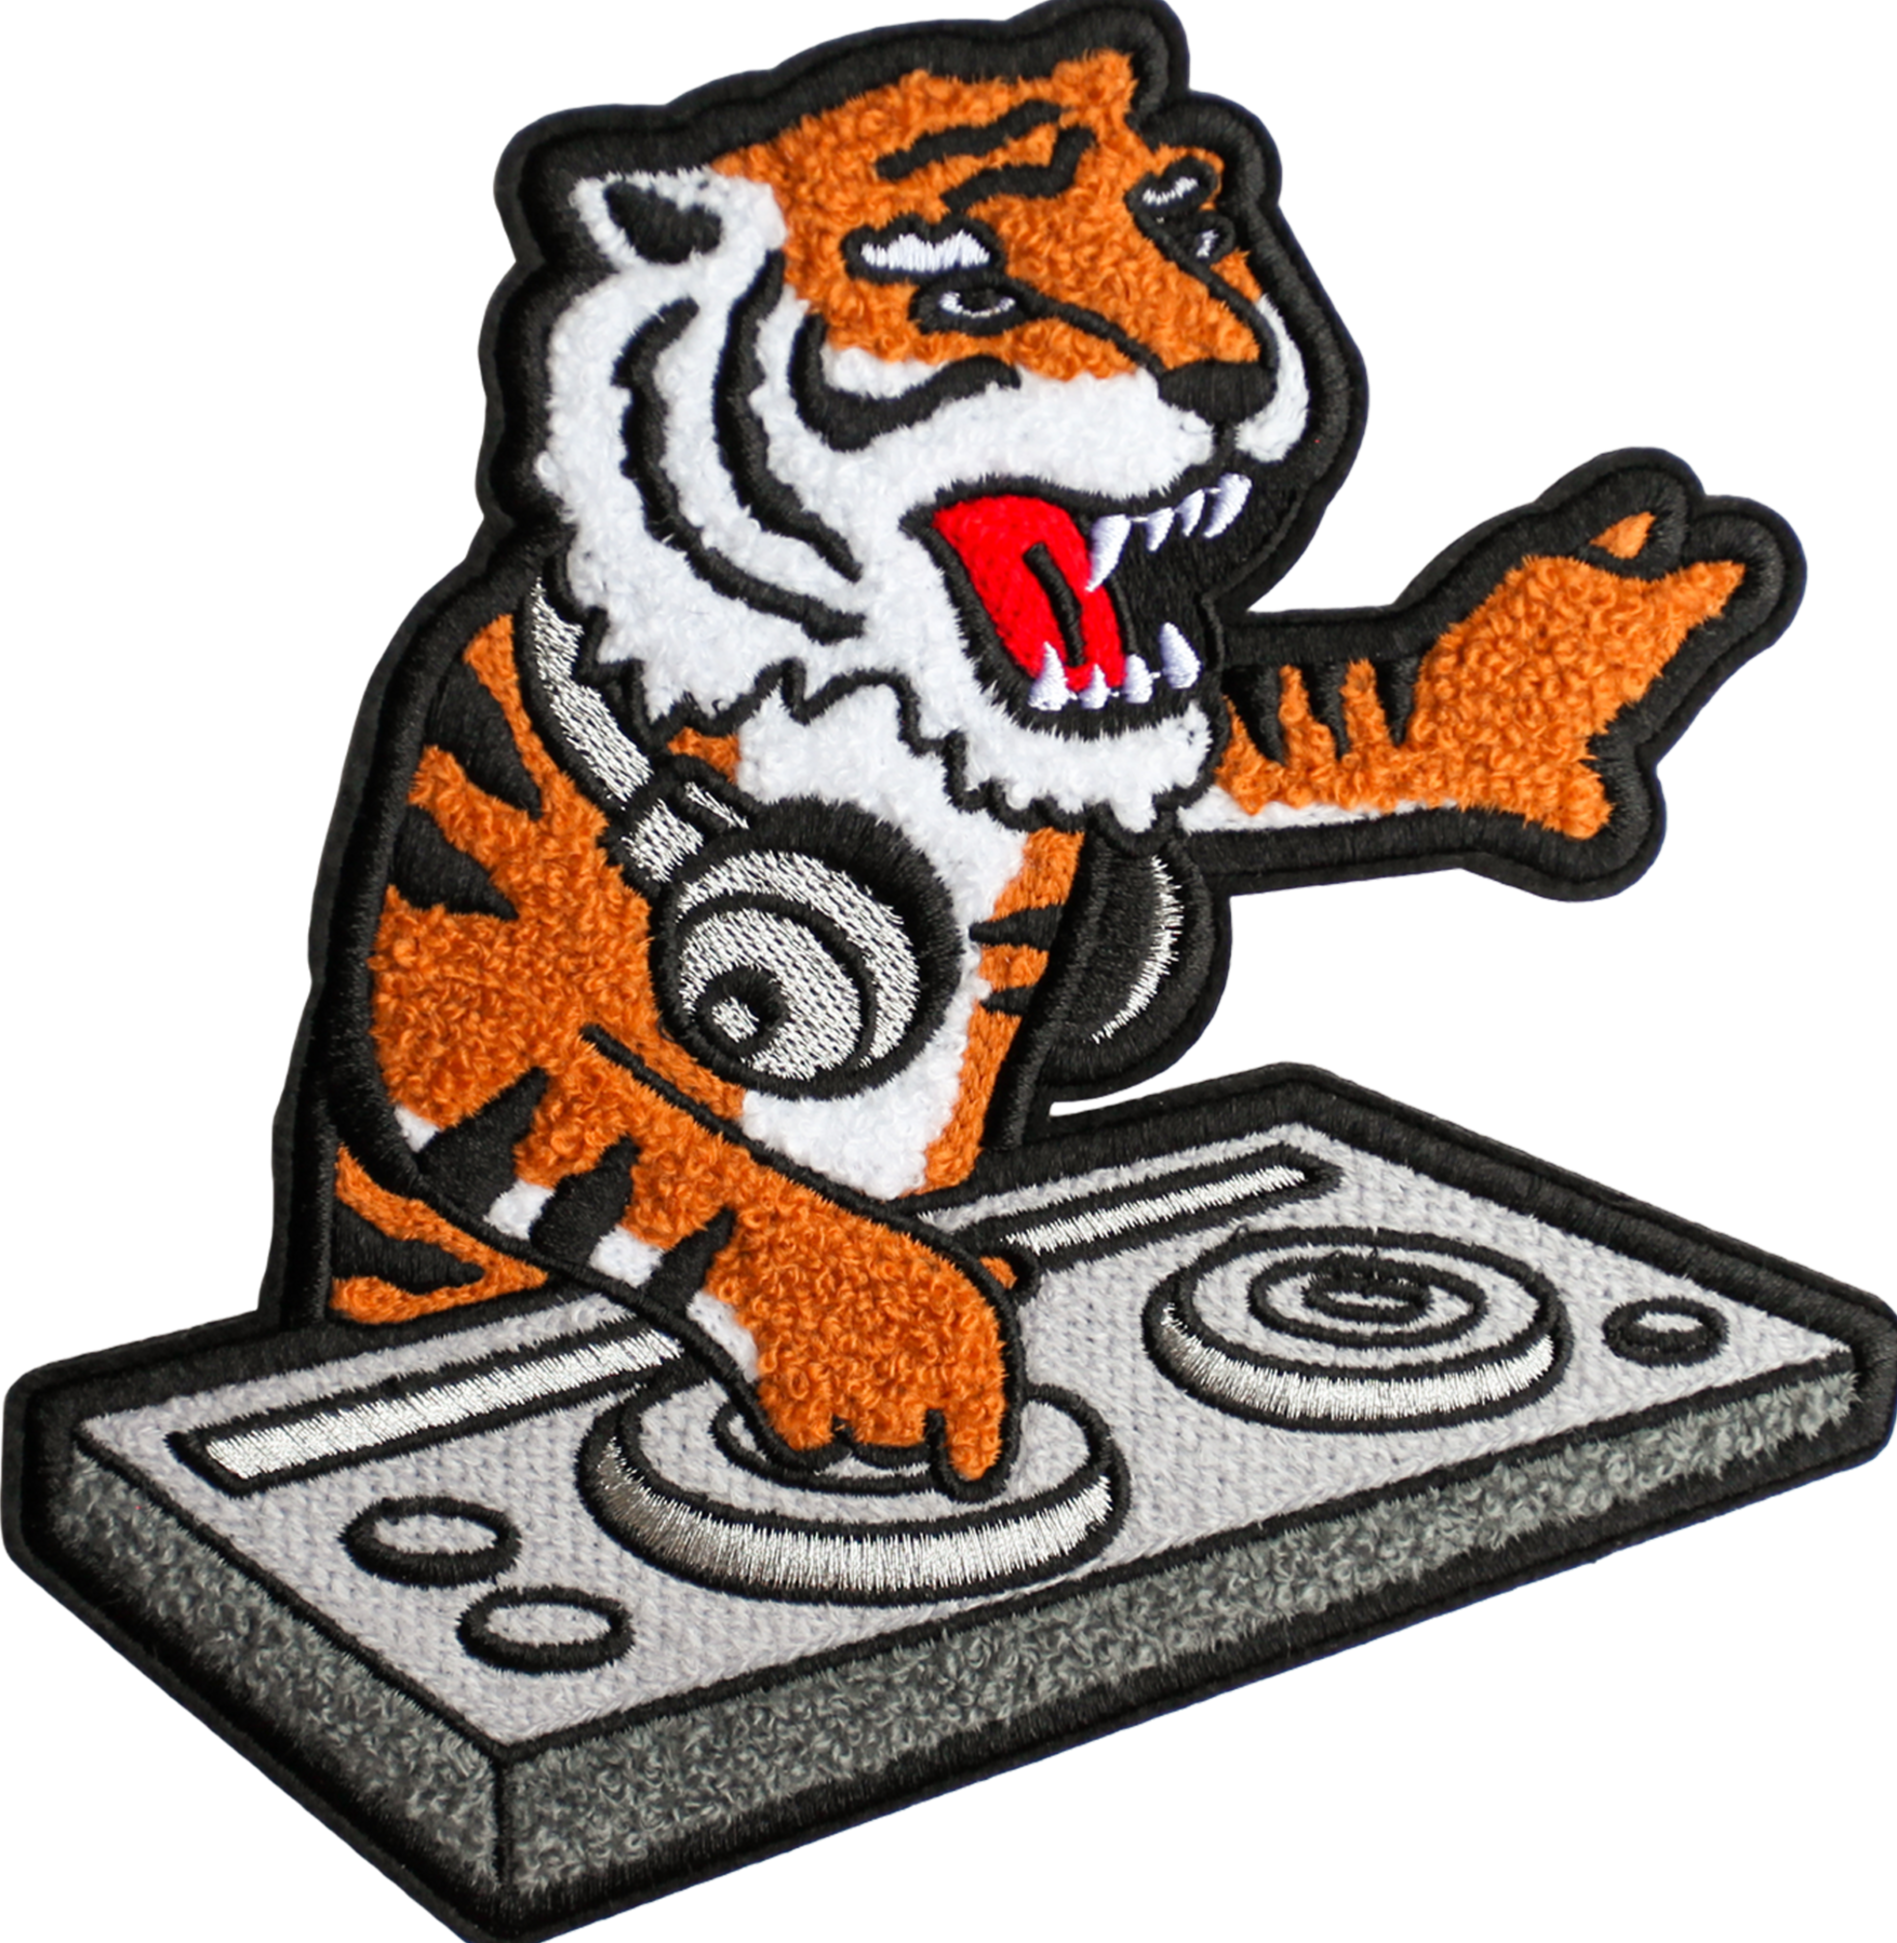 DJ Tiger